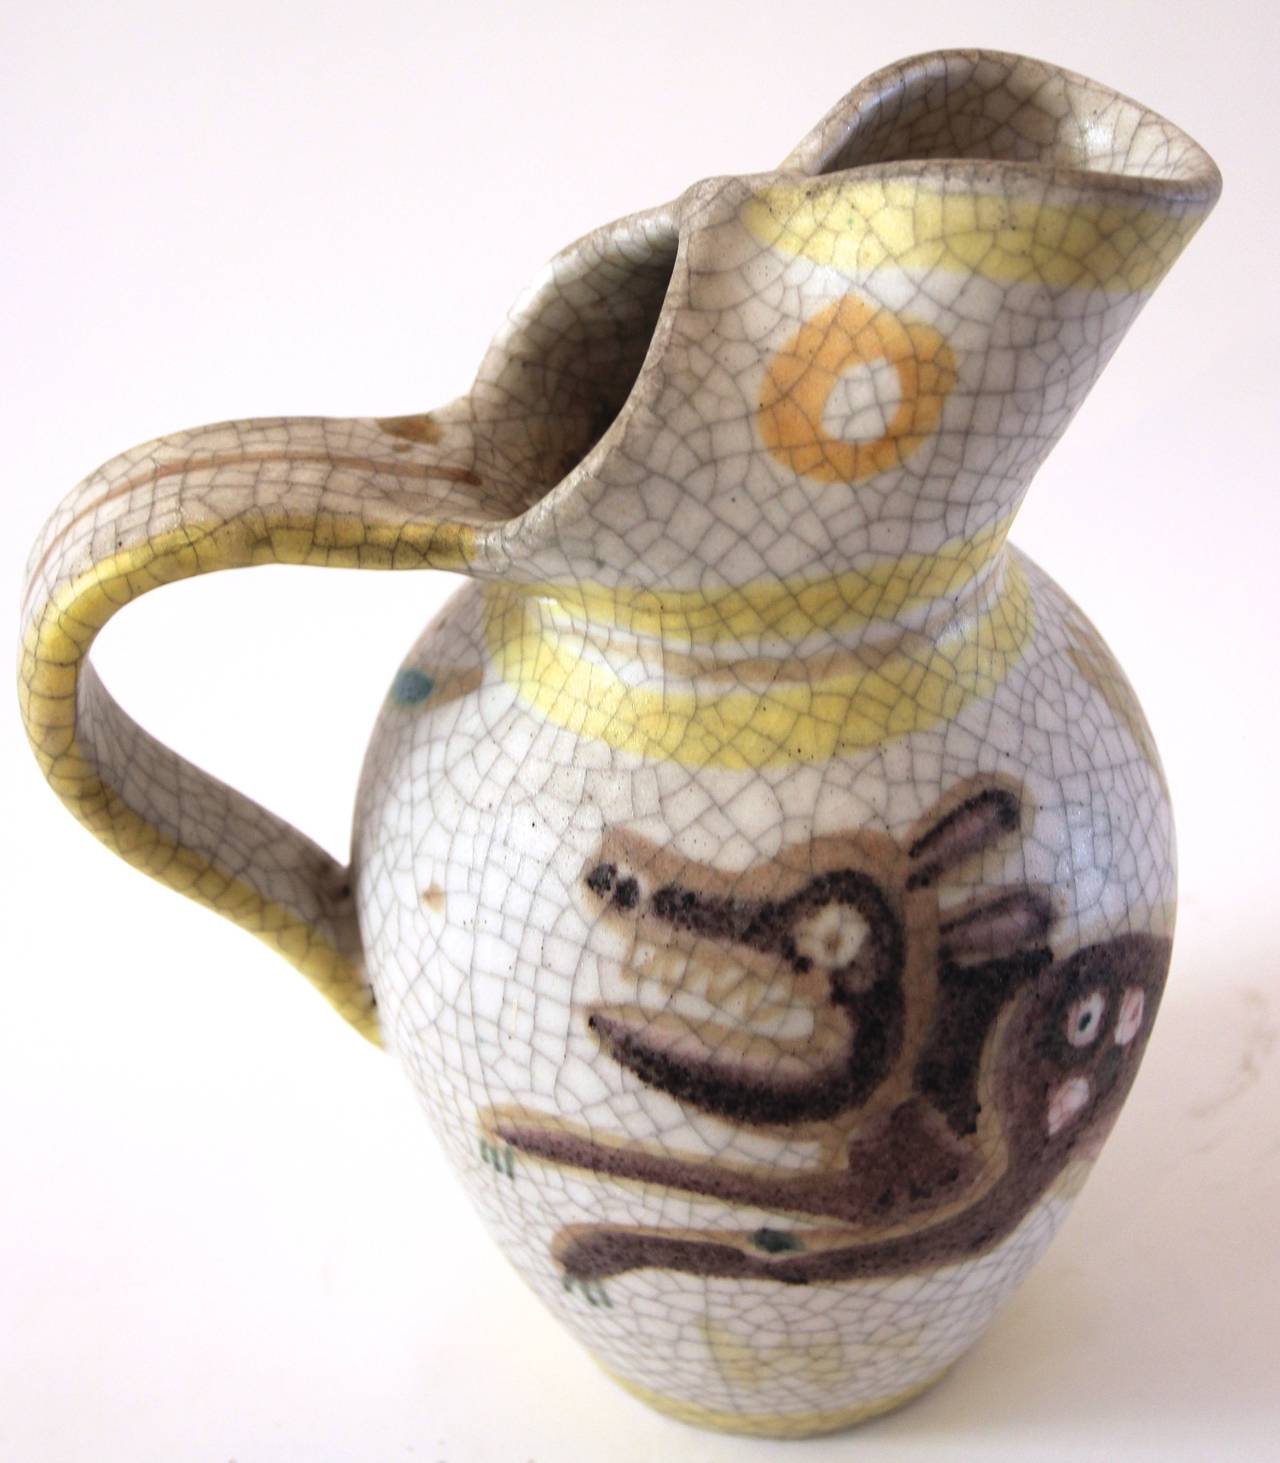 Guido Gambone,
Polychrome glazed earthenware pitcher,
Signed: Gambone,
circa 1960, Italy.
Measures: Height 26 cm, diameter 16 cm.